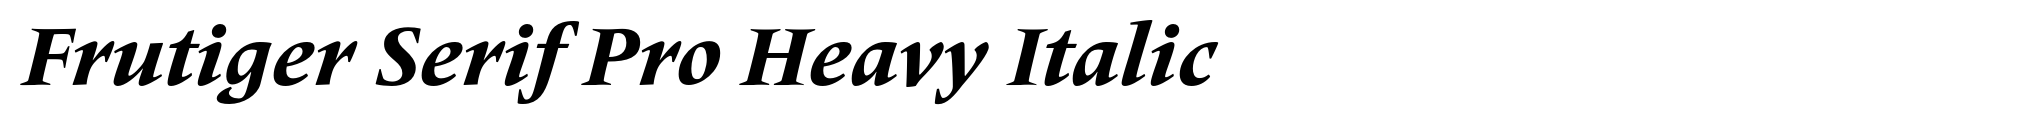 Frutiger Serif Pro Heavy Italic image